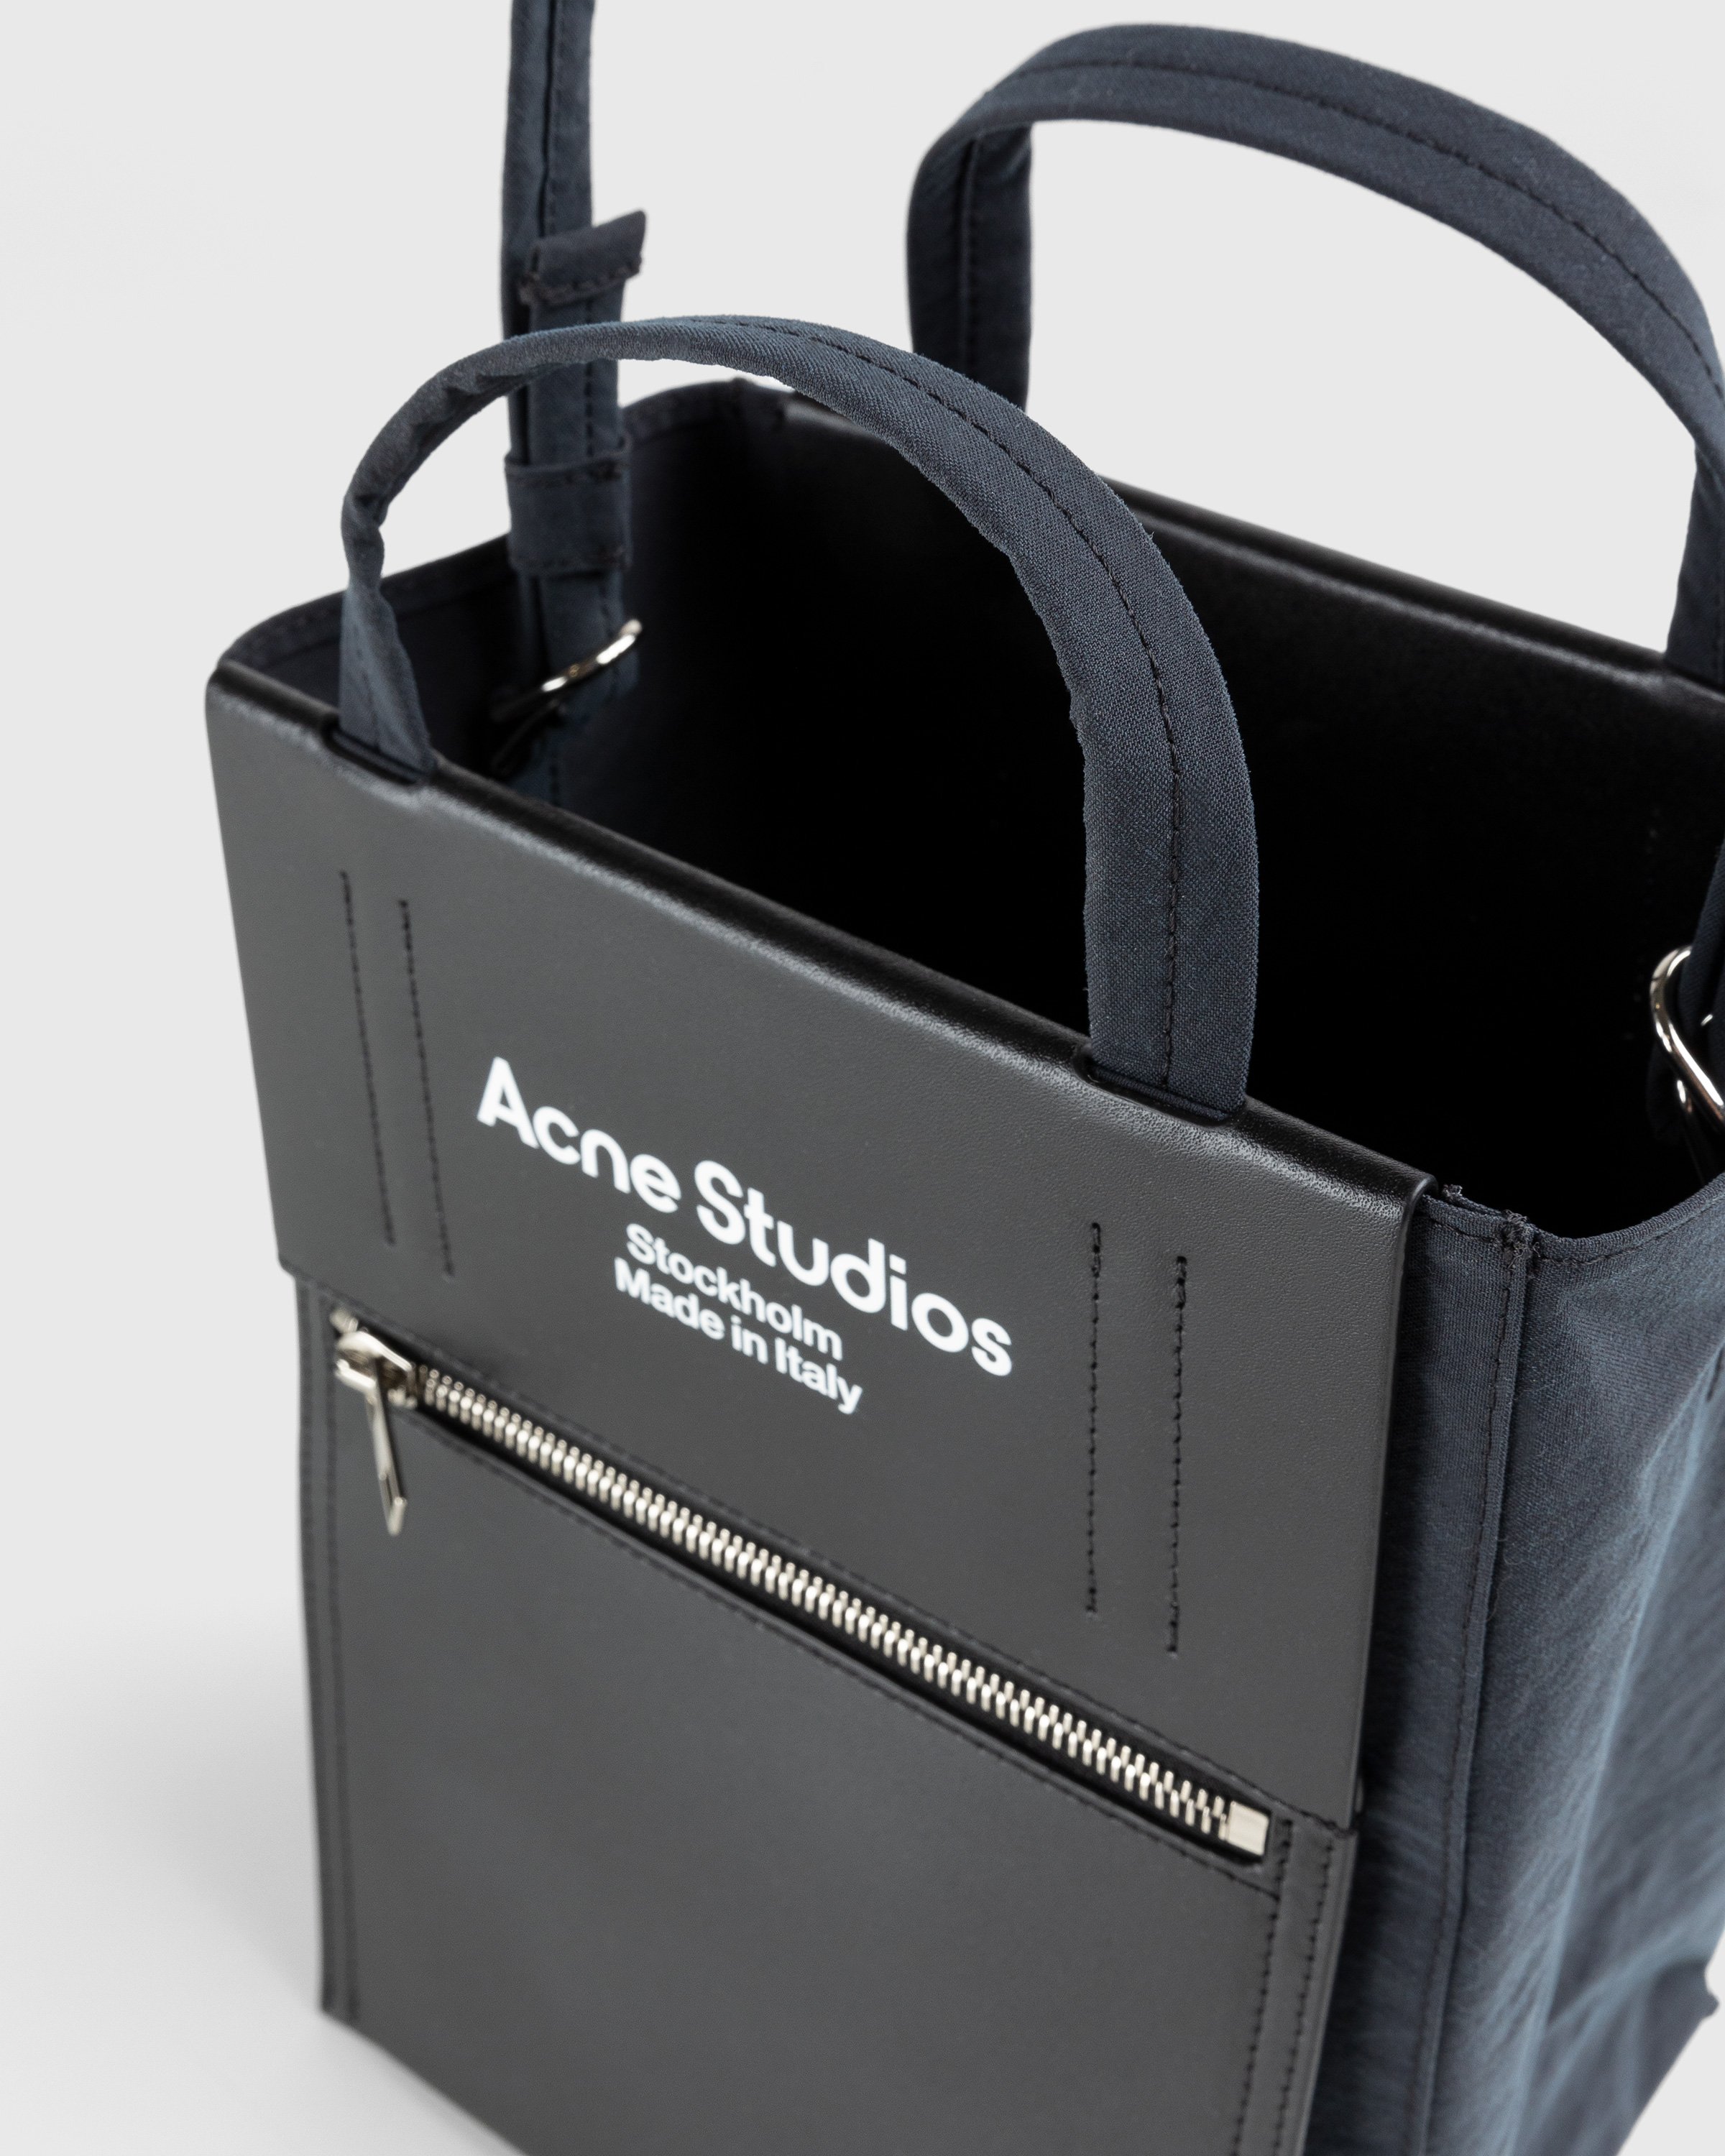 Acne Studios - Papery Nylon Tote Bag Black - Accessories - Black - Image 4